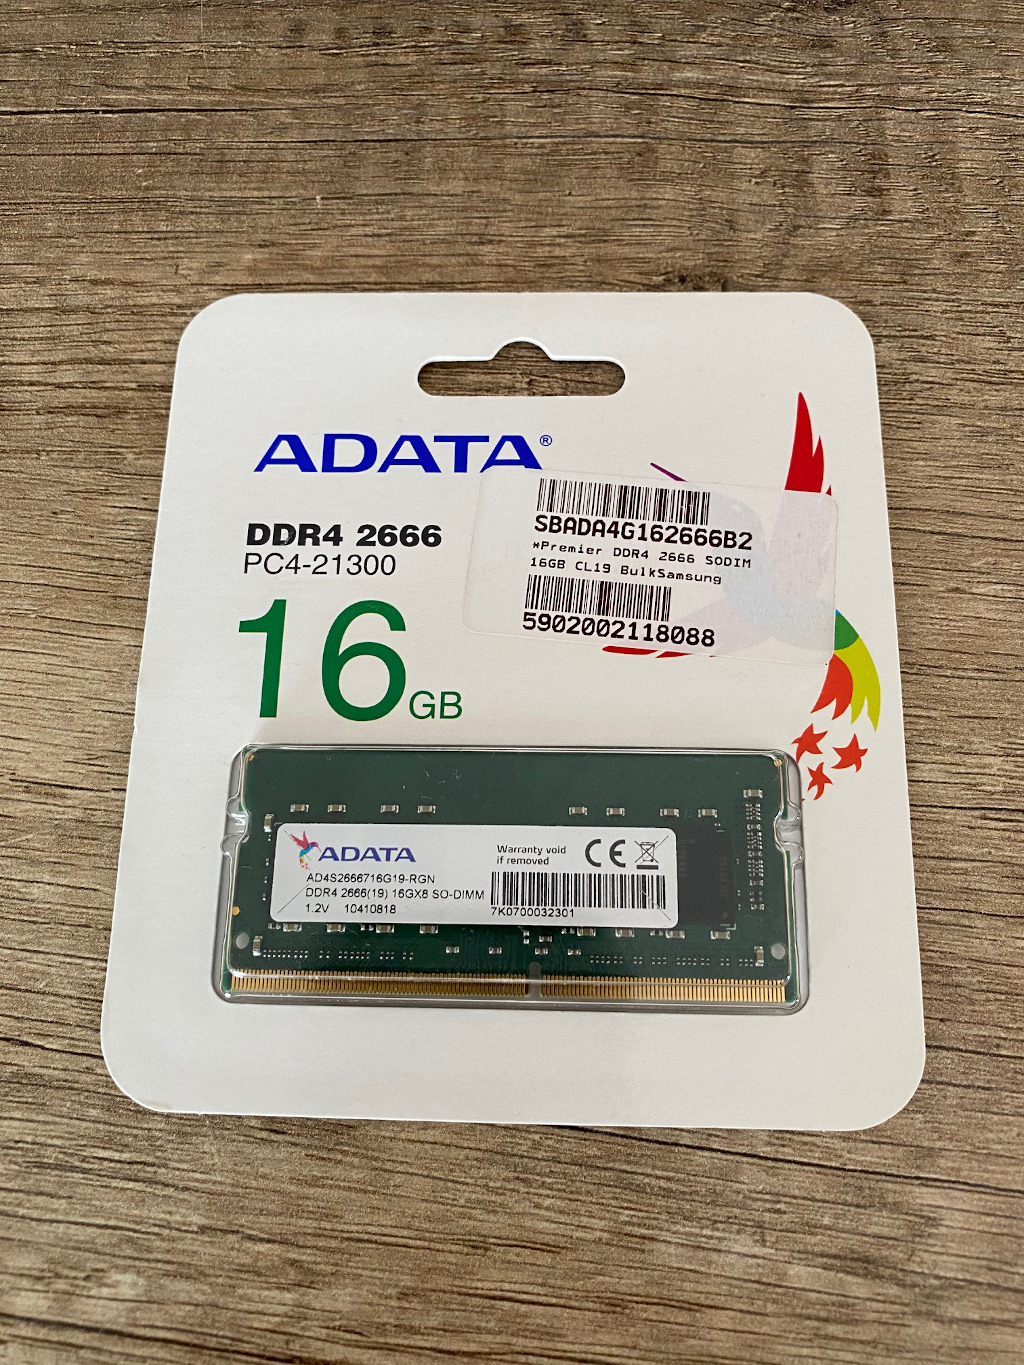 NUC Memory - Adata DDR4 2666